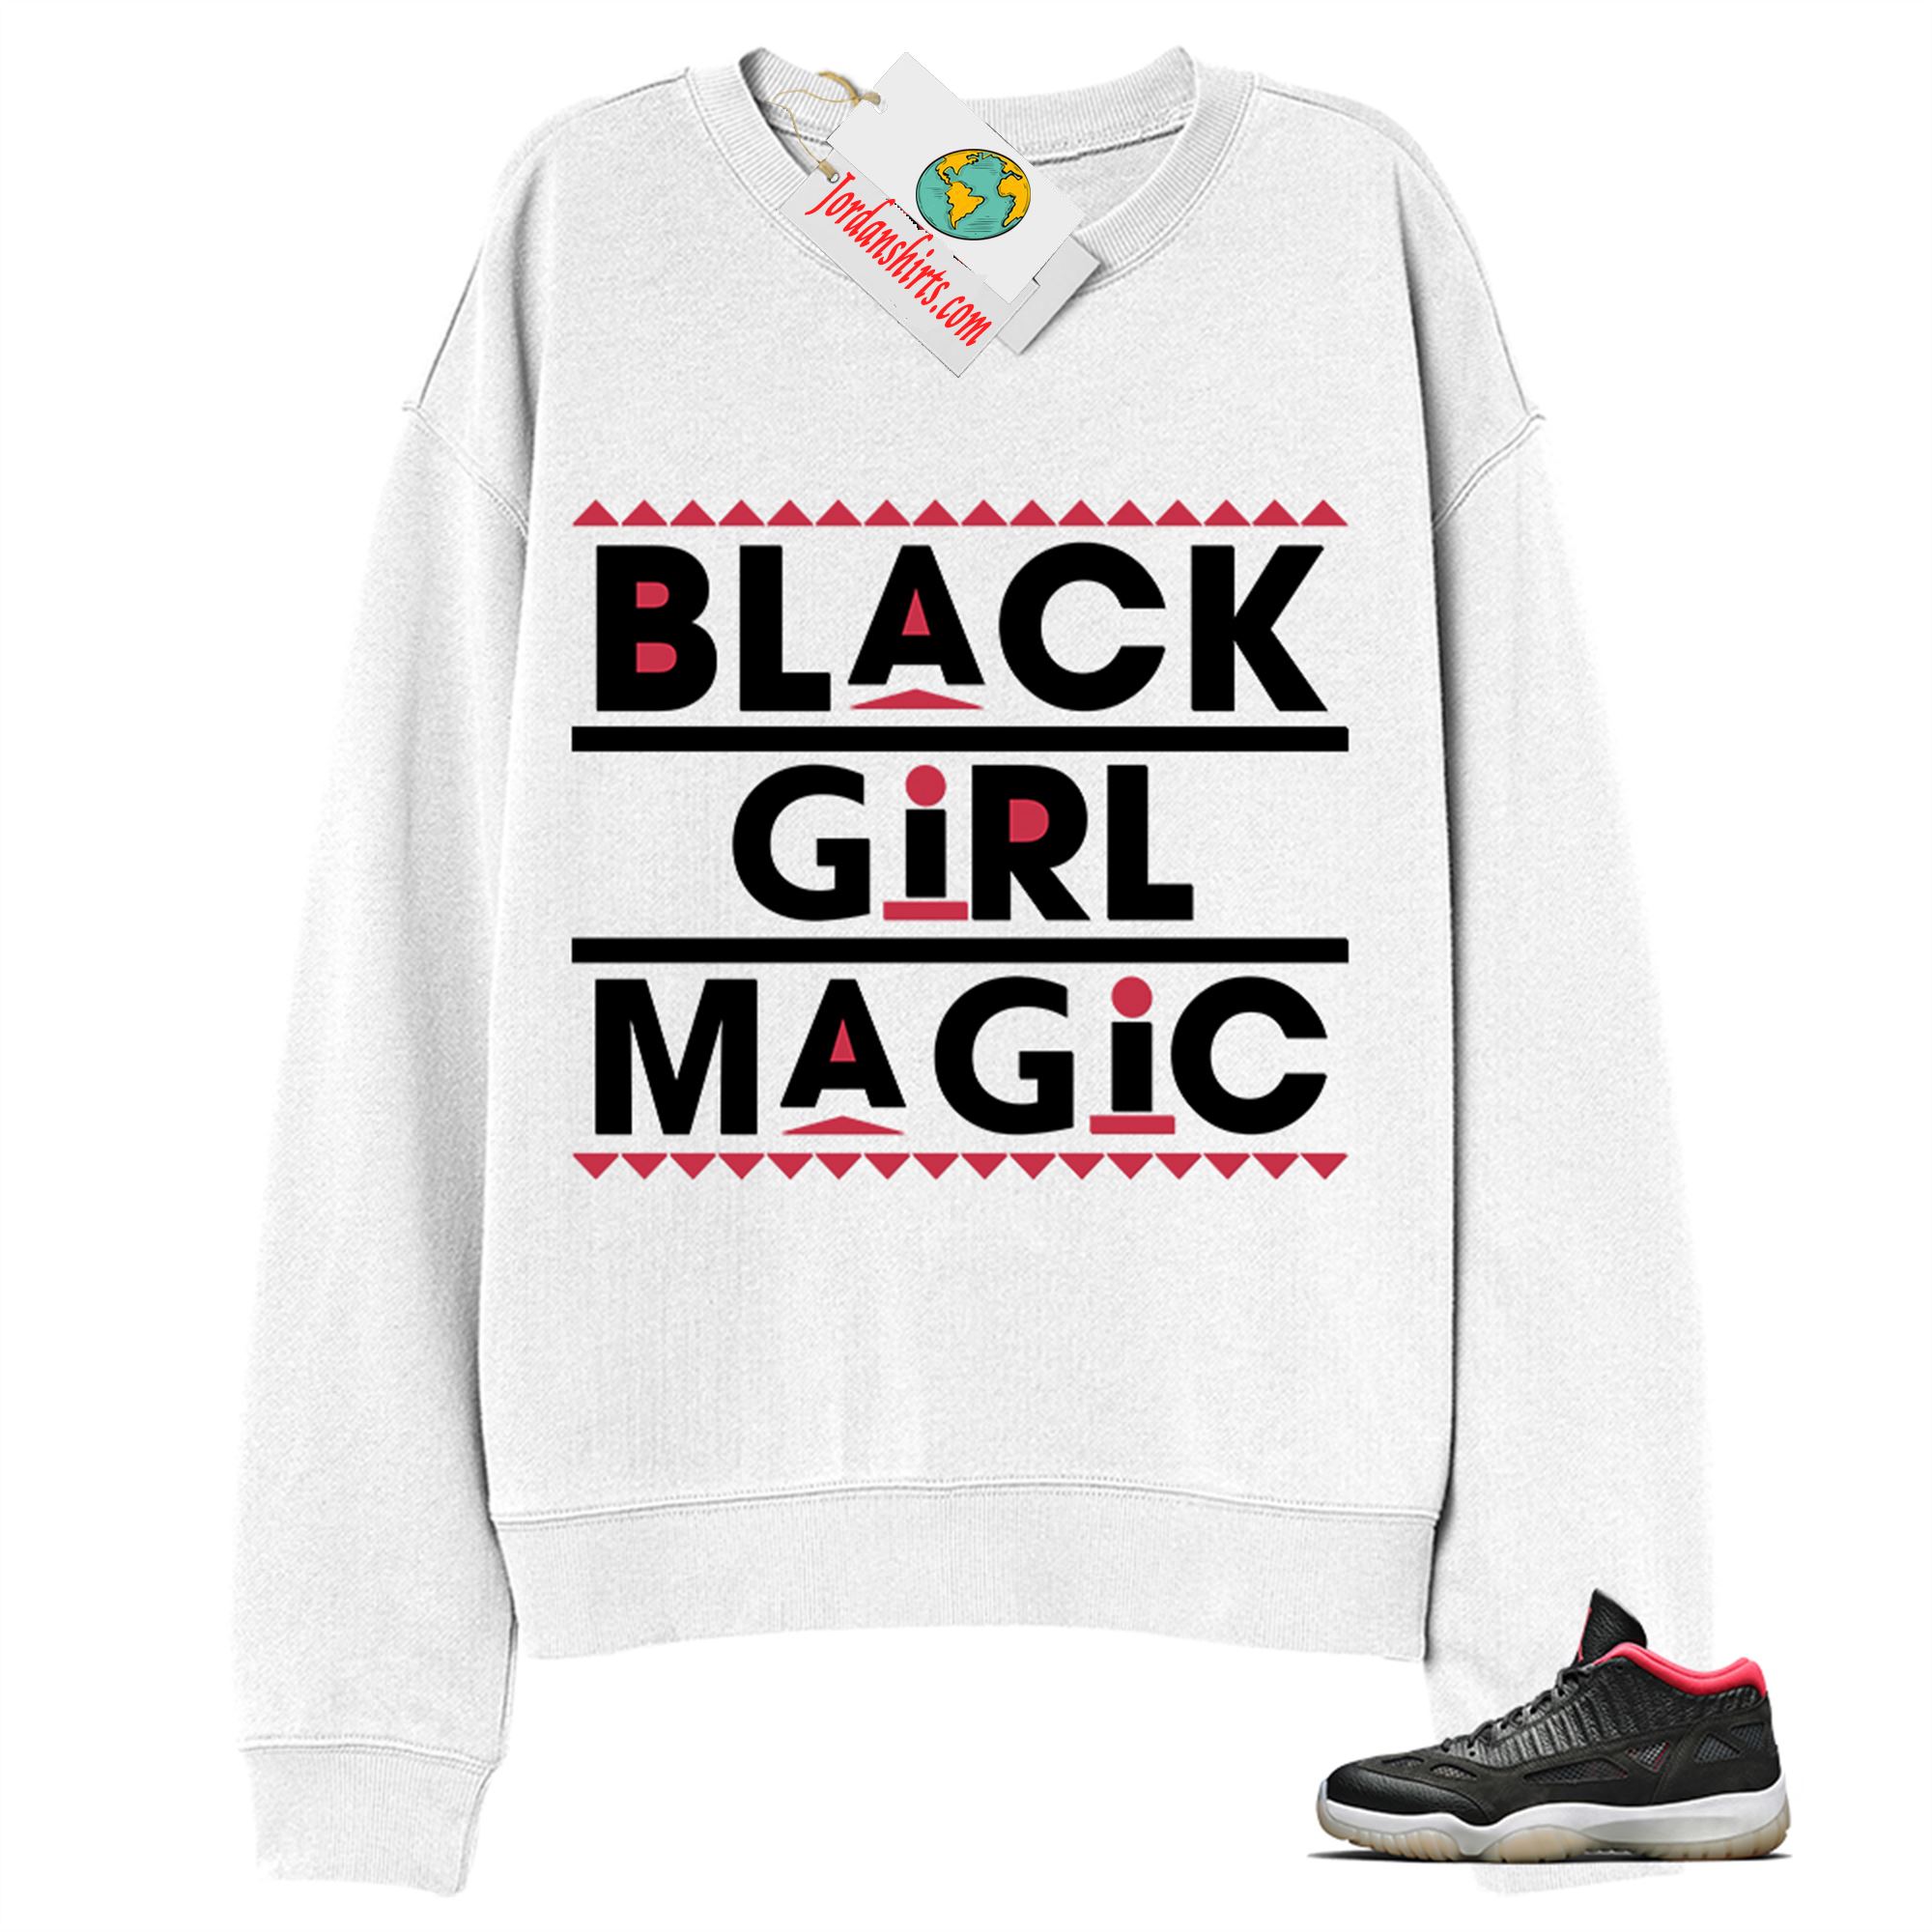 Jordan 11 Sweatshirt, Black Girl Magic White Sweatshirt Air Jordan 11 Bred 11s Full Size Up To 5xl